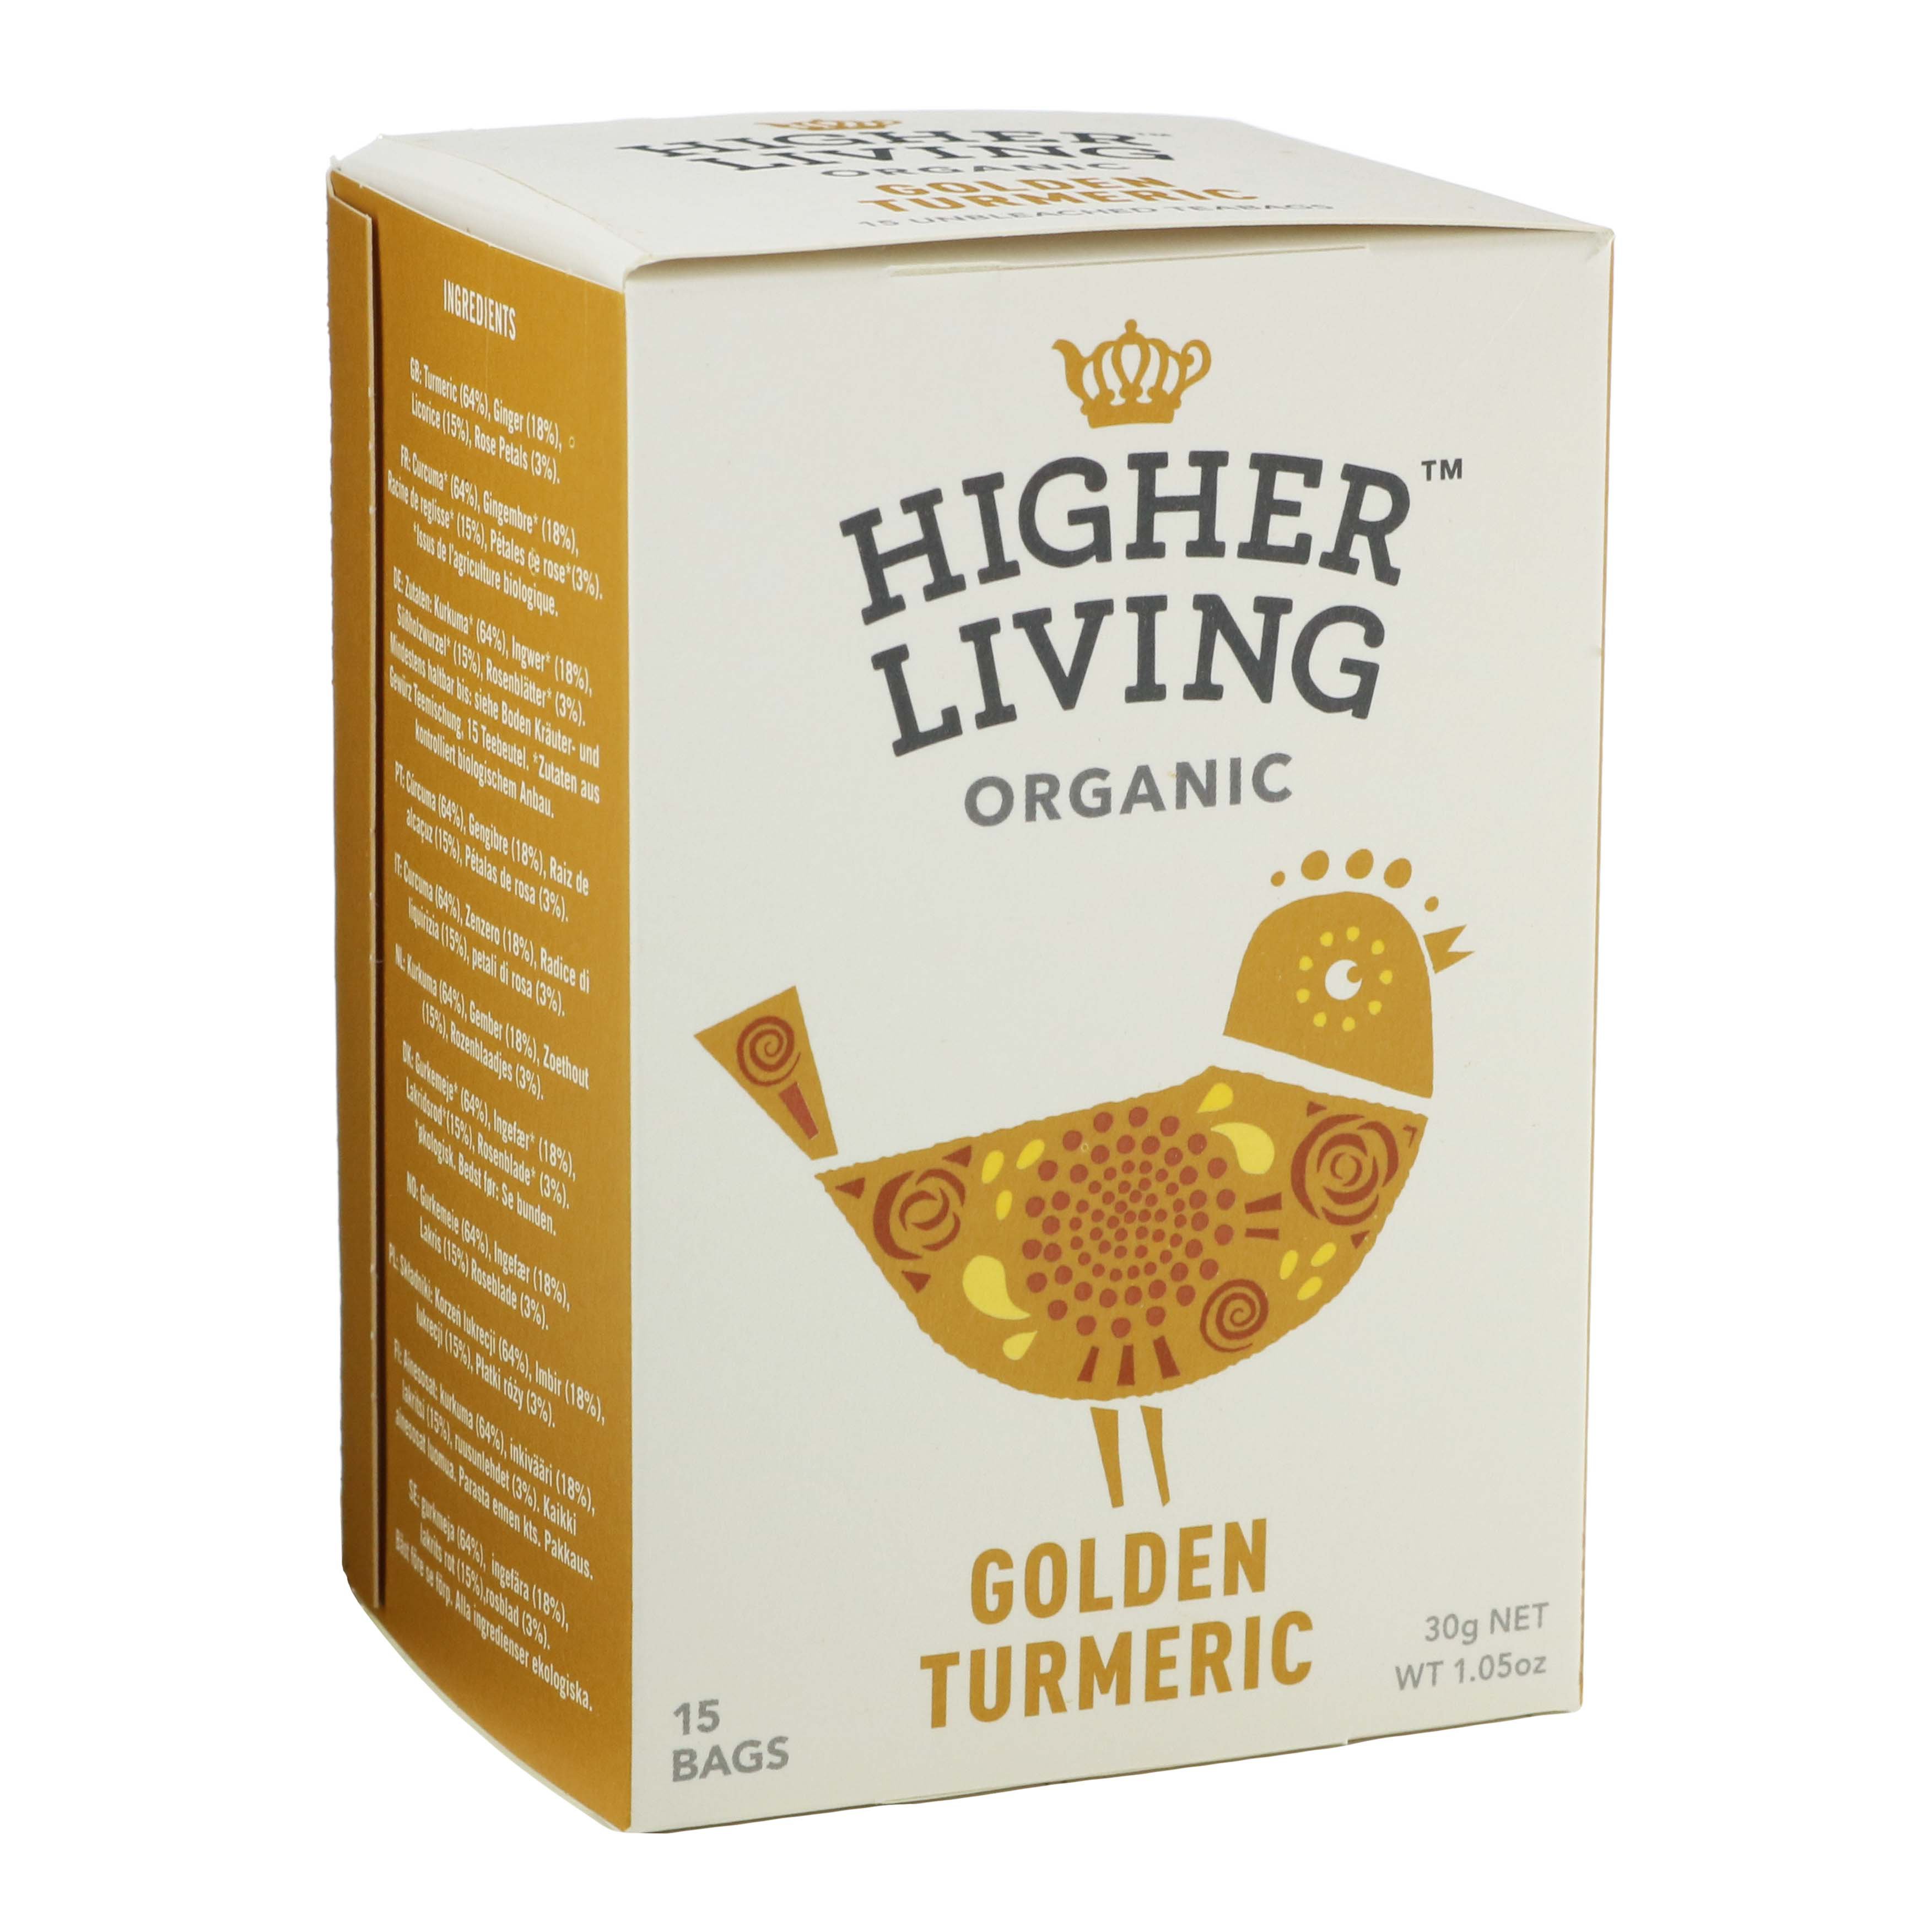 Higher Living Organic Golden Turmeric Tea Bags Shop Tea At H E B